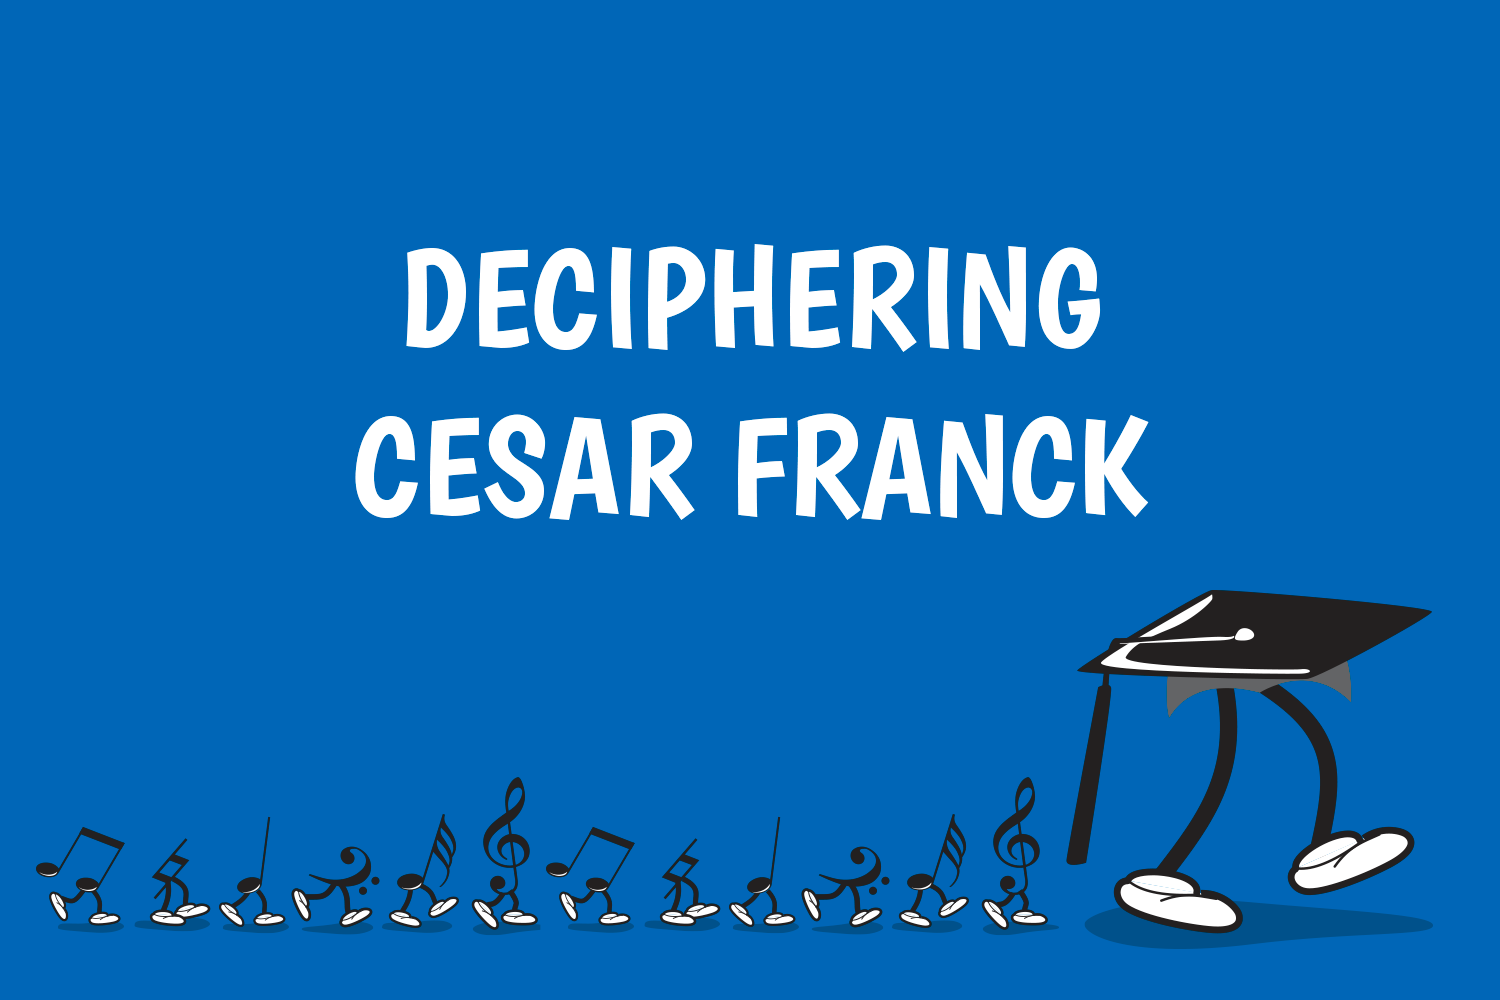 Deciphering Cesar Franck